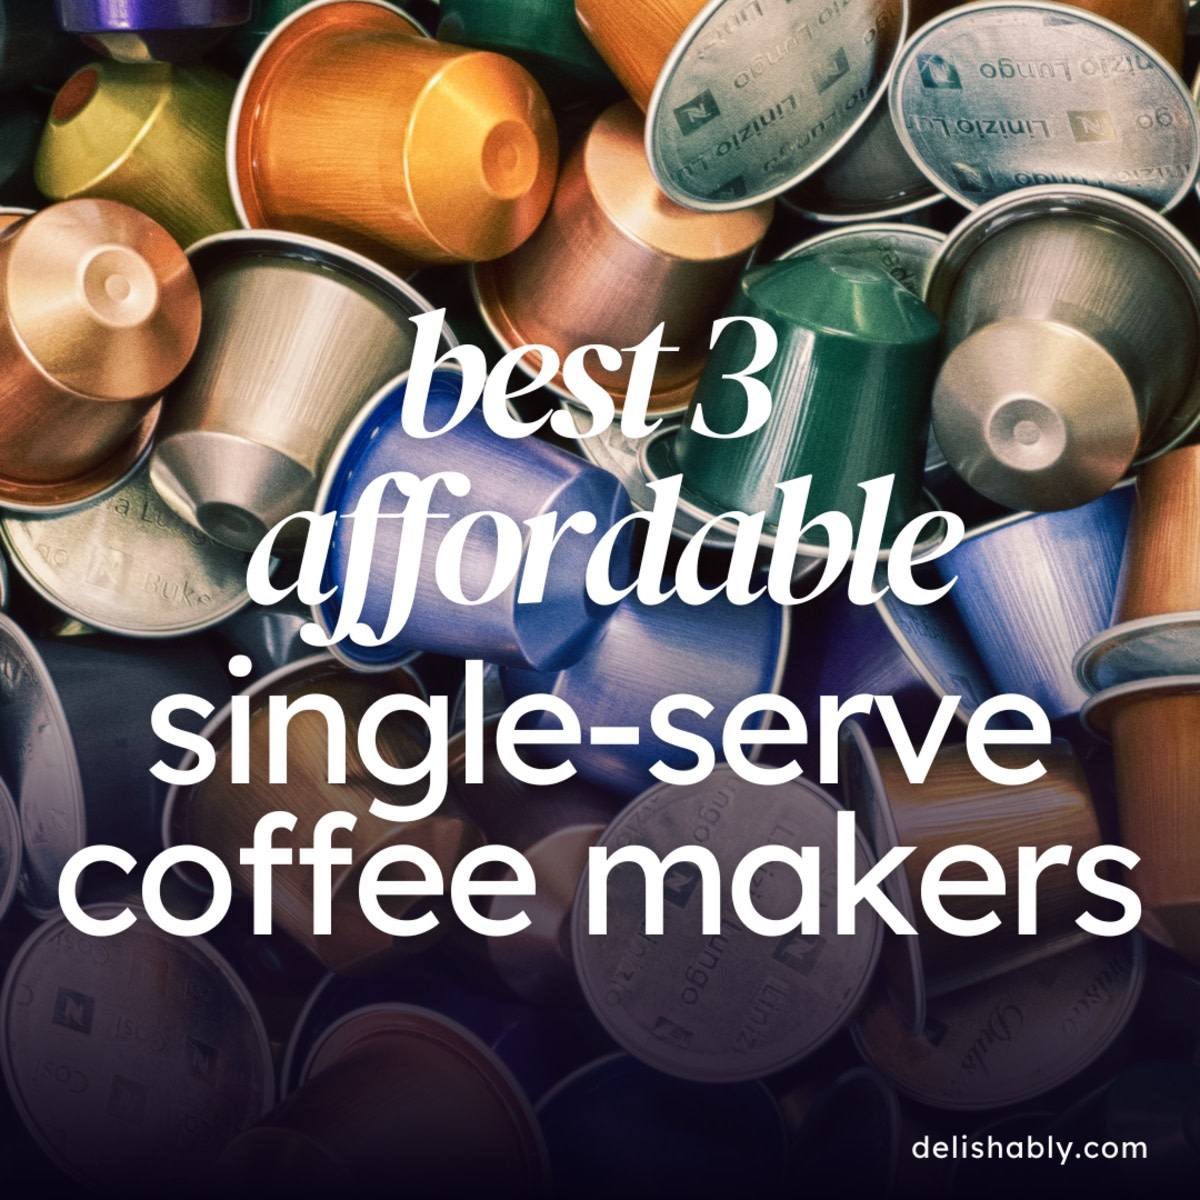 Most Affordable Single-Serve: The Hamilton Beach 49981A Coffee